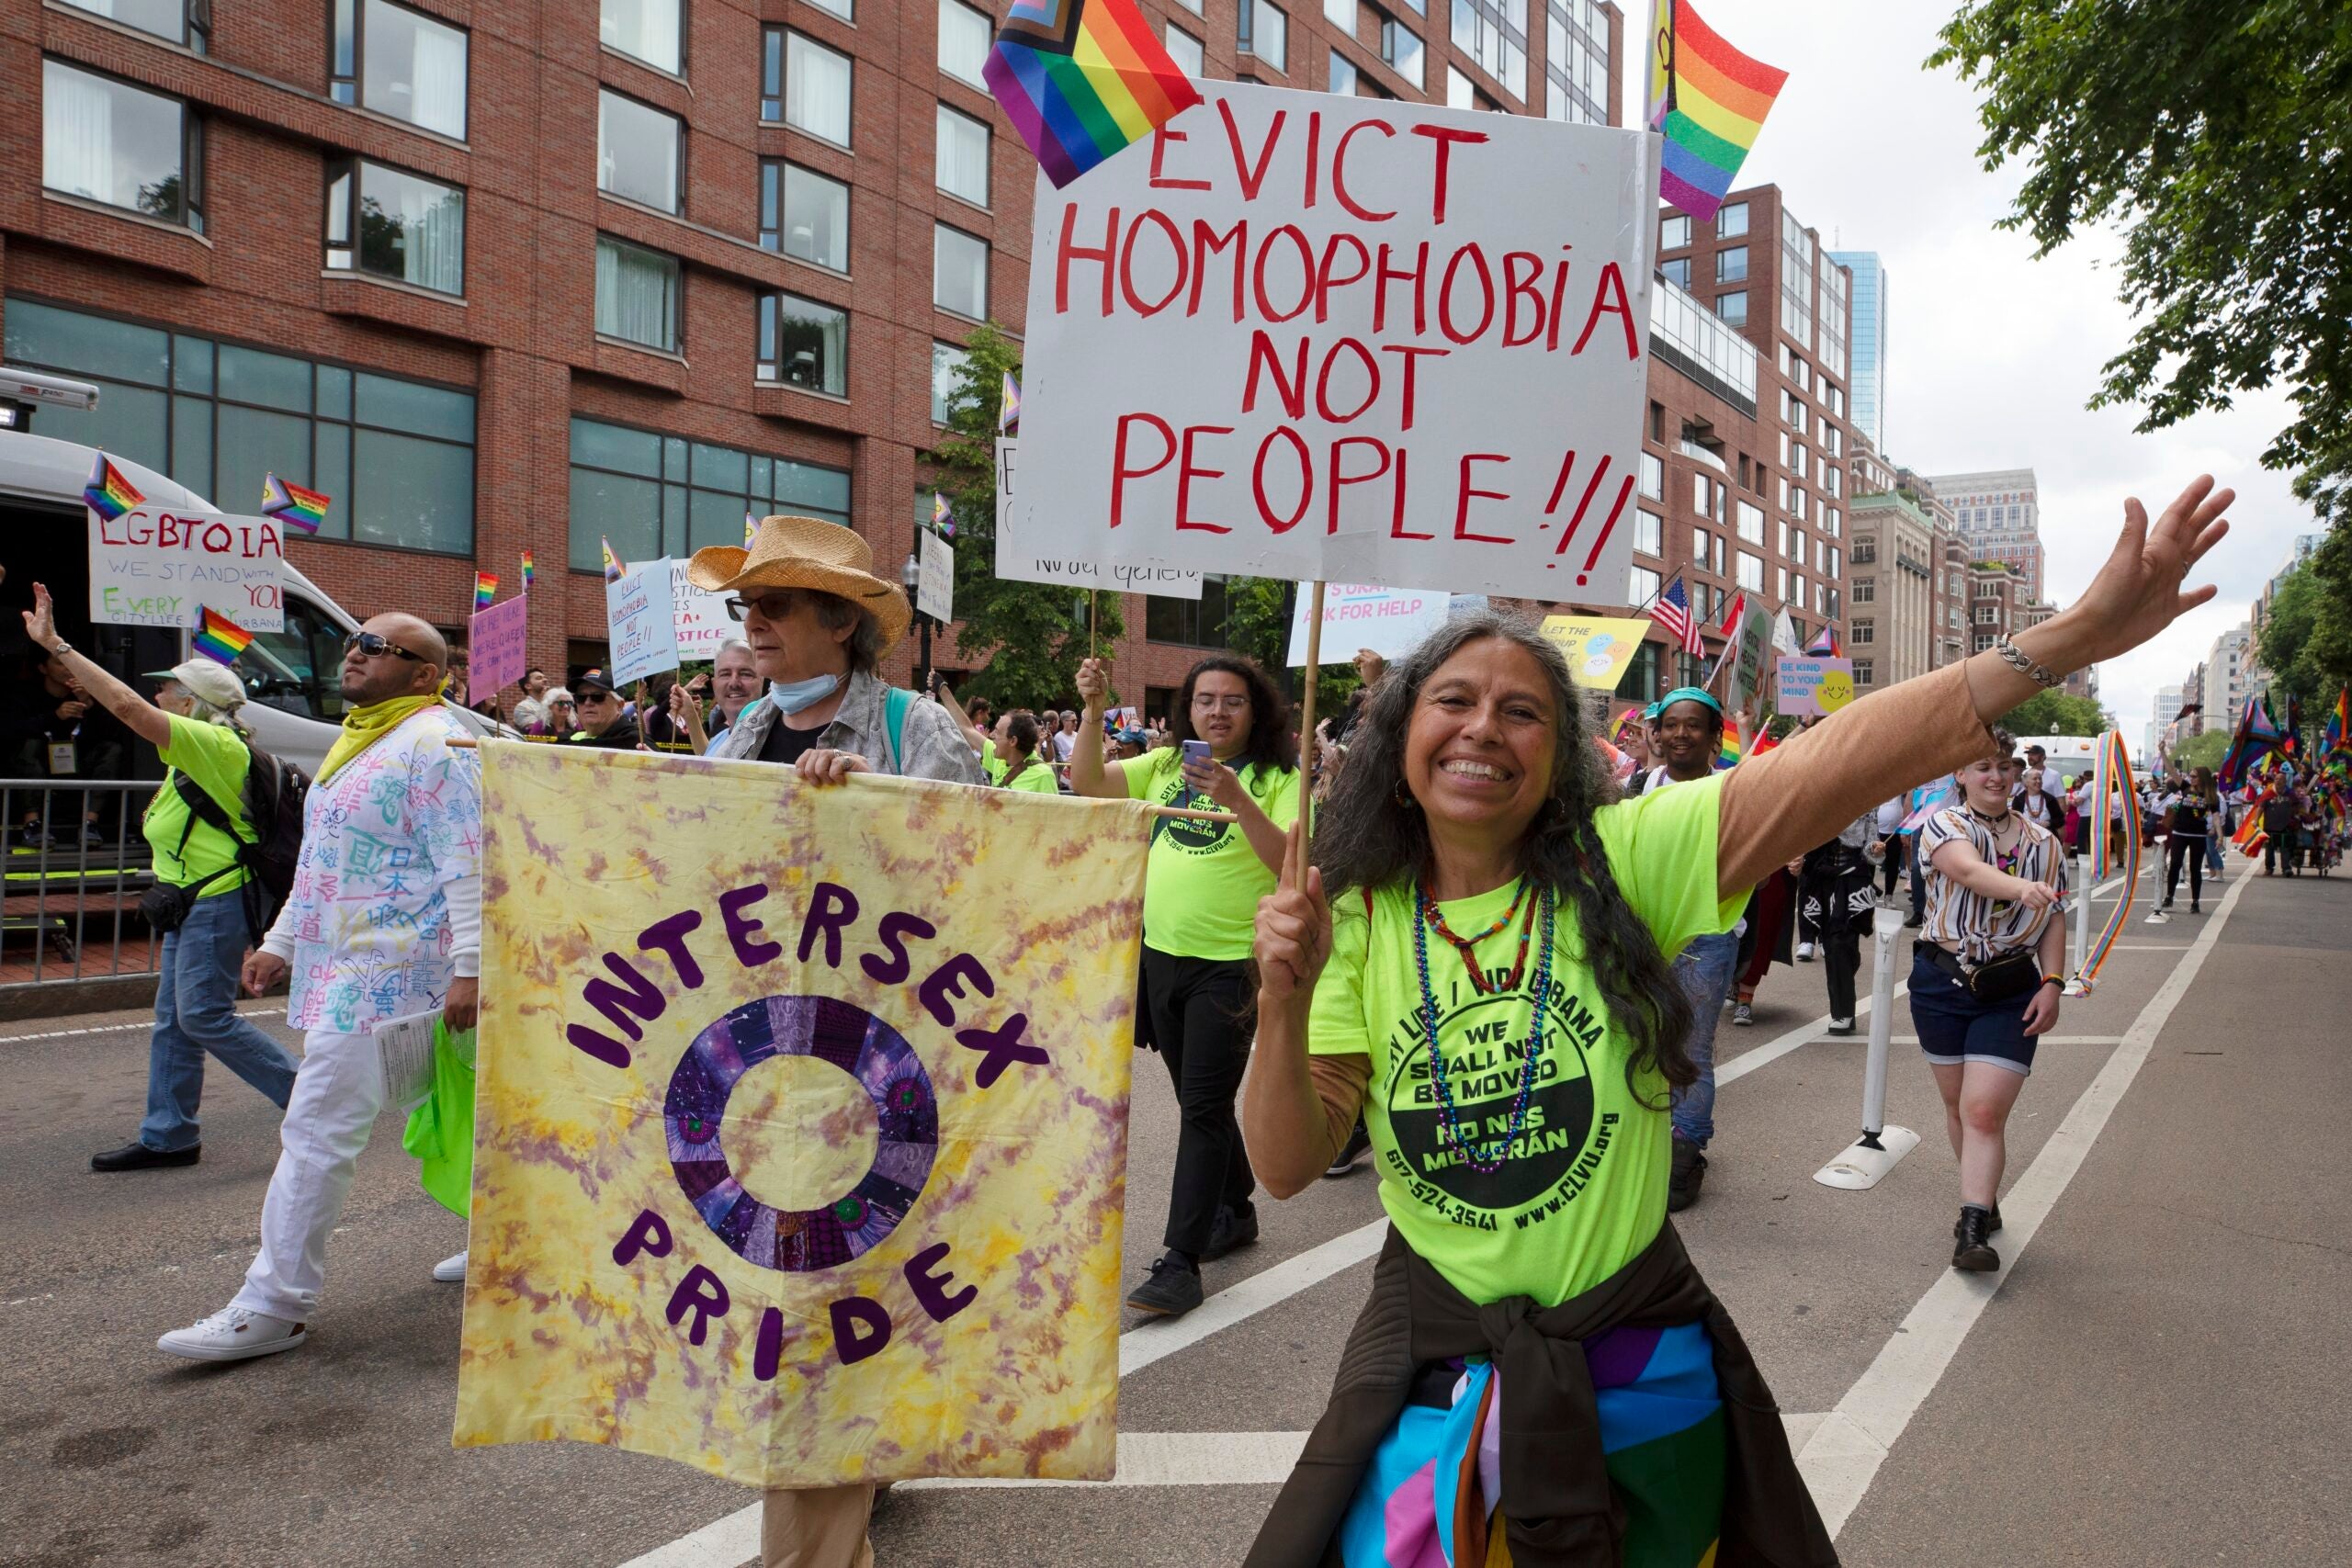 Photos: Boston's Pride parade returns after 3-year hiatus